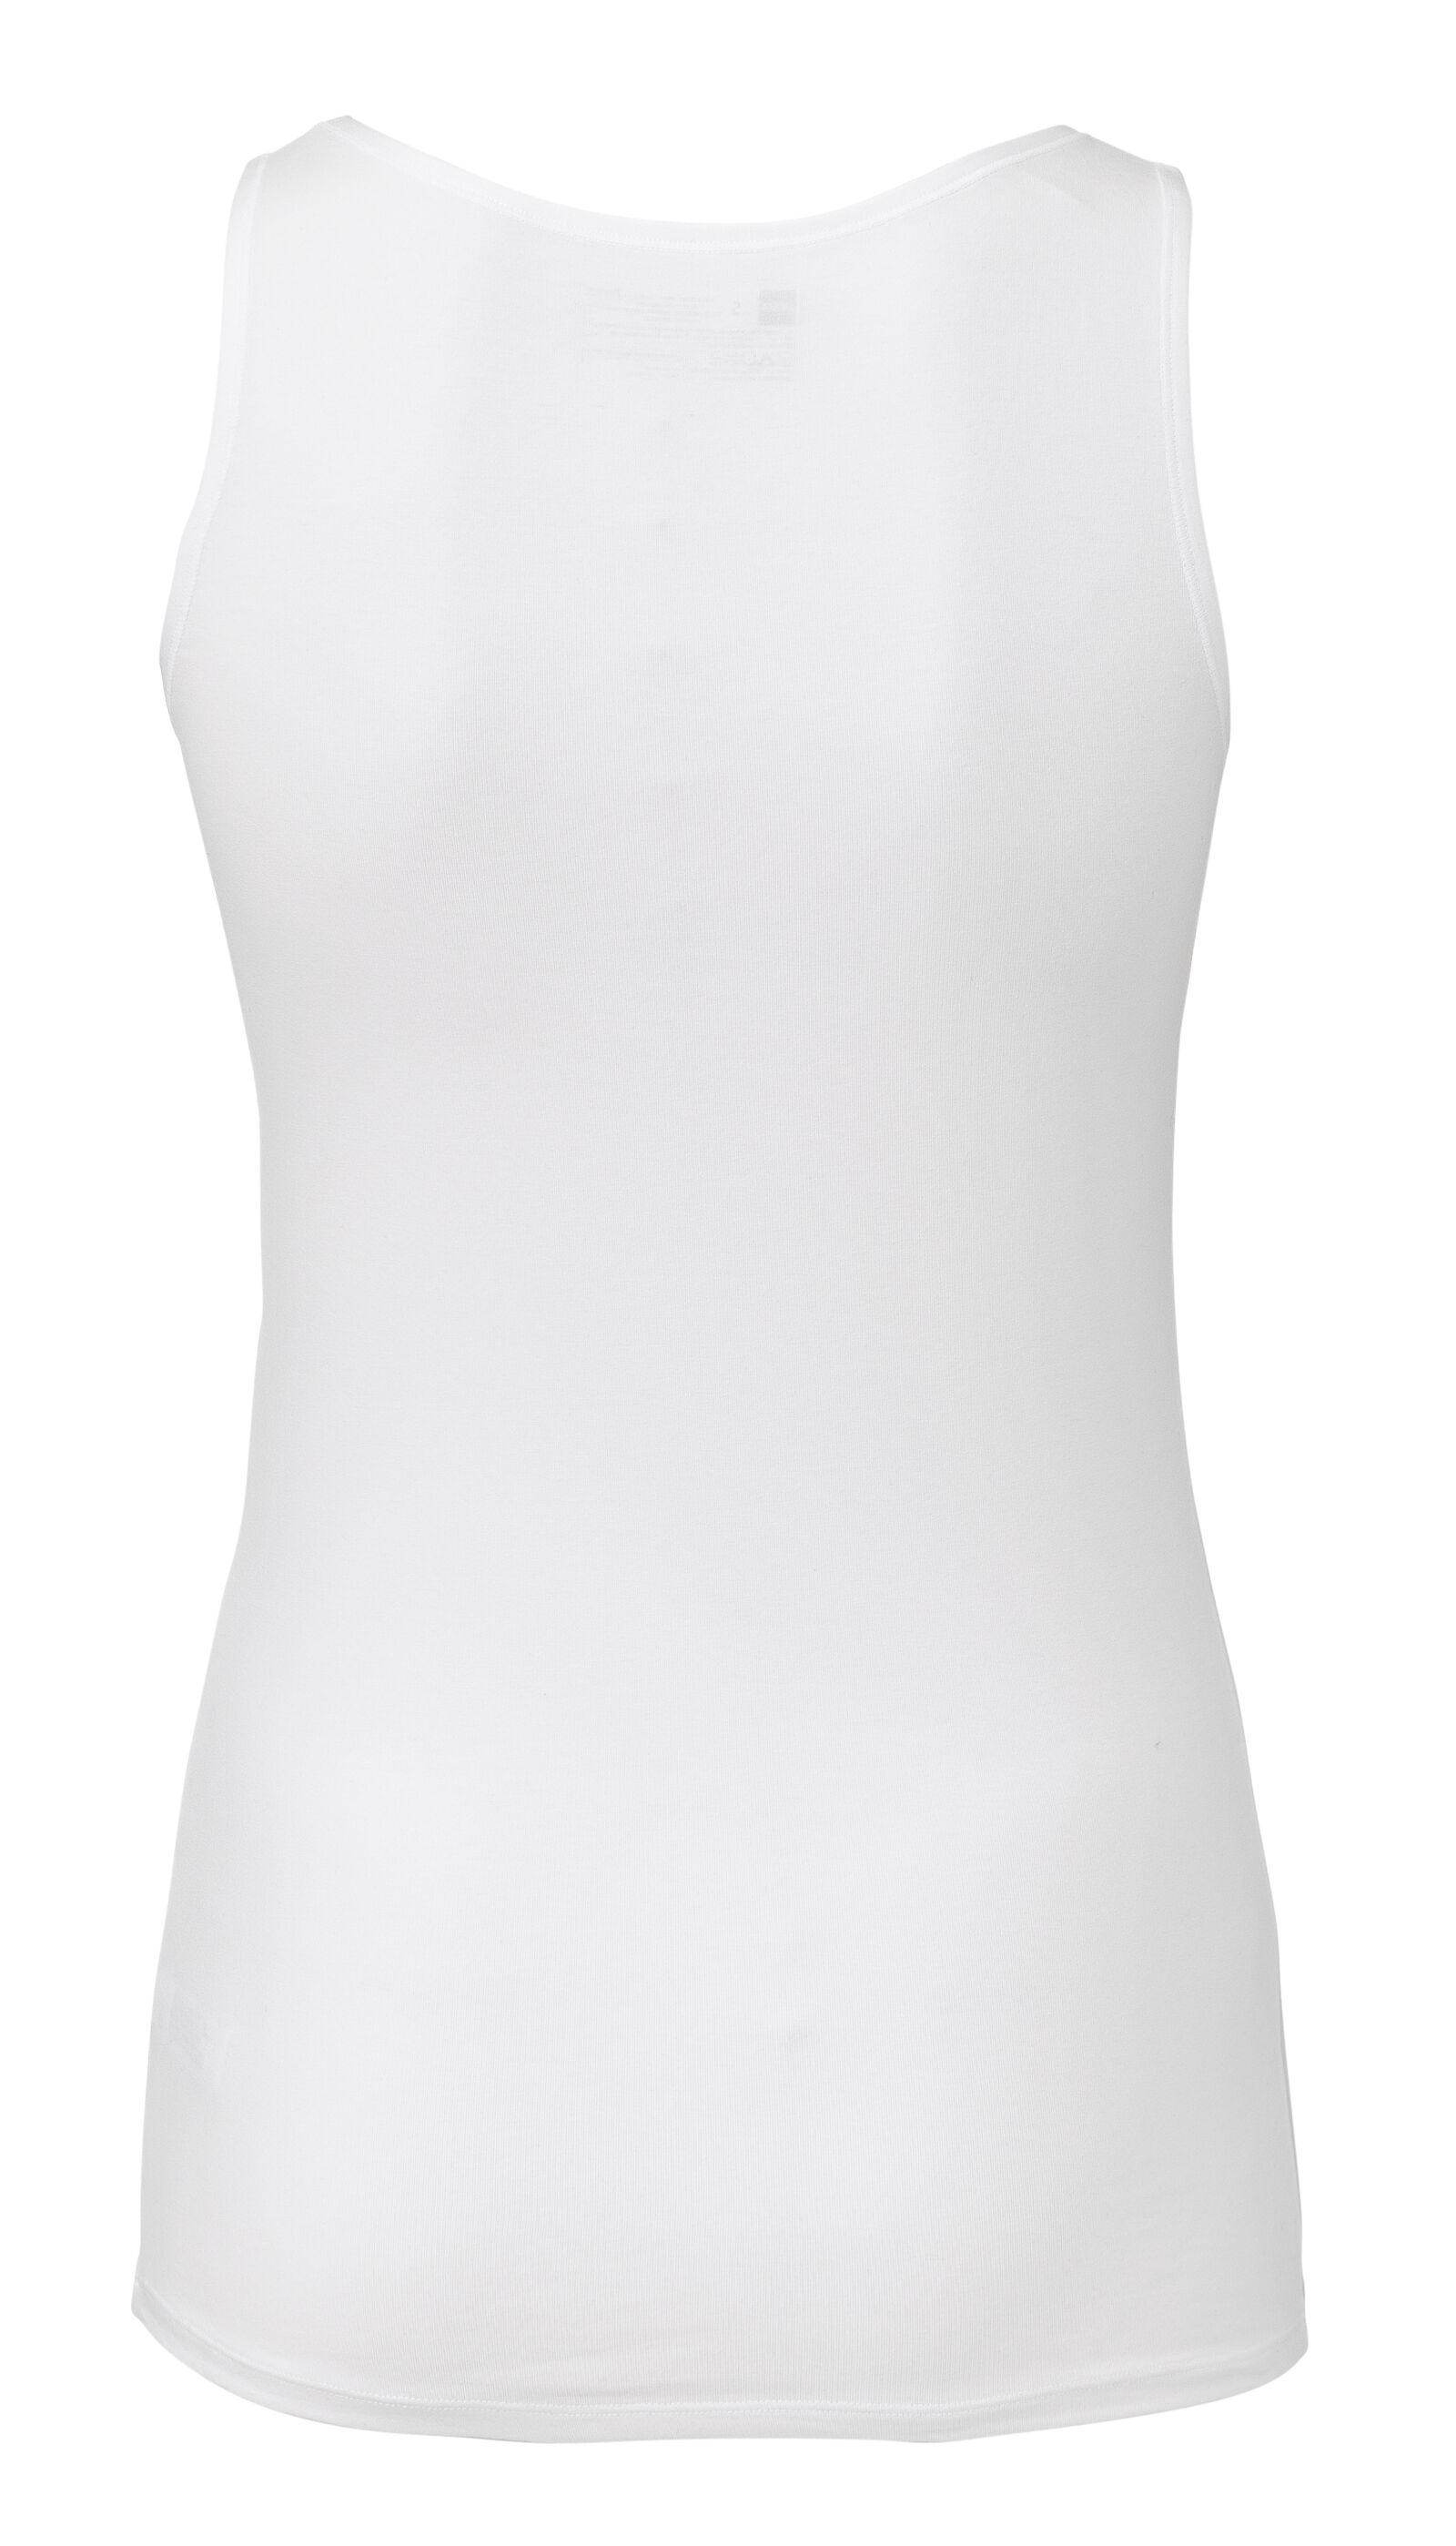 débardeur femme - real lasting cotton blanc blanc - 1000001947 - HEMA